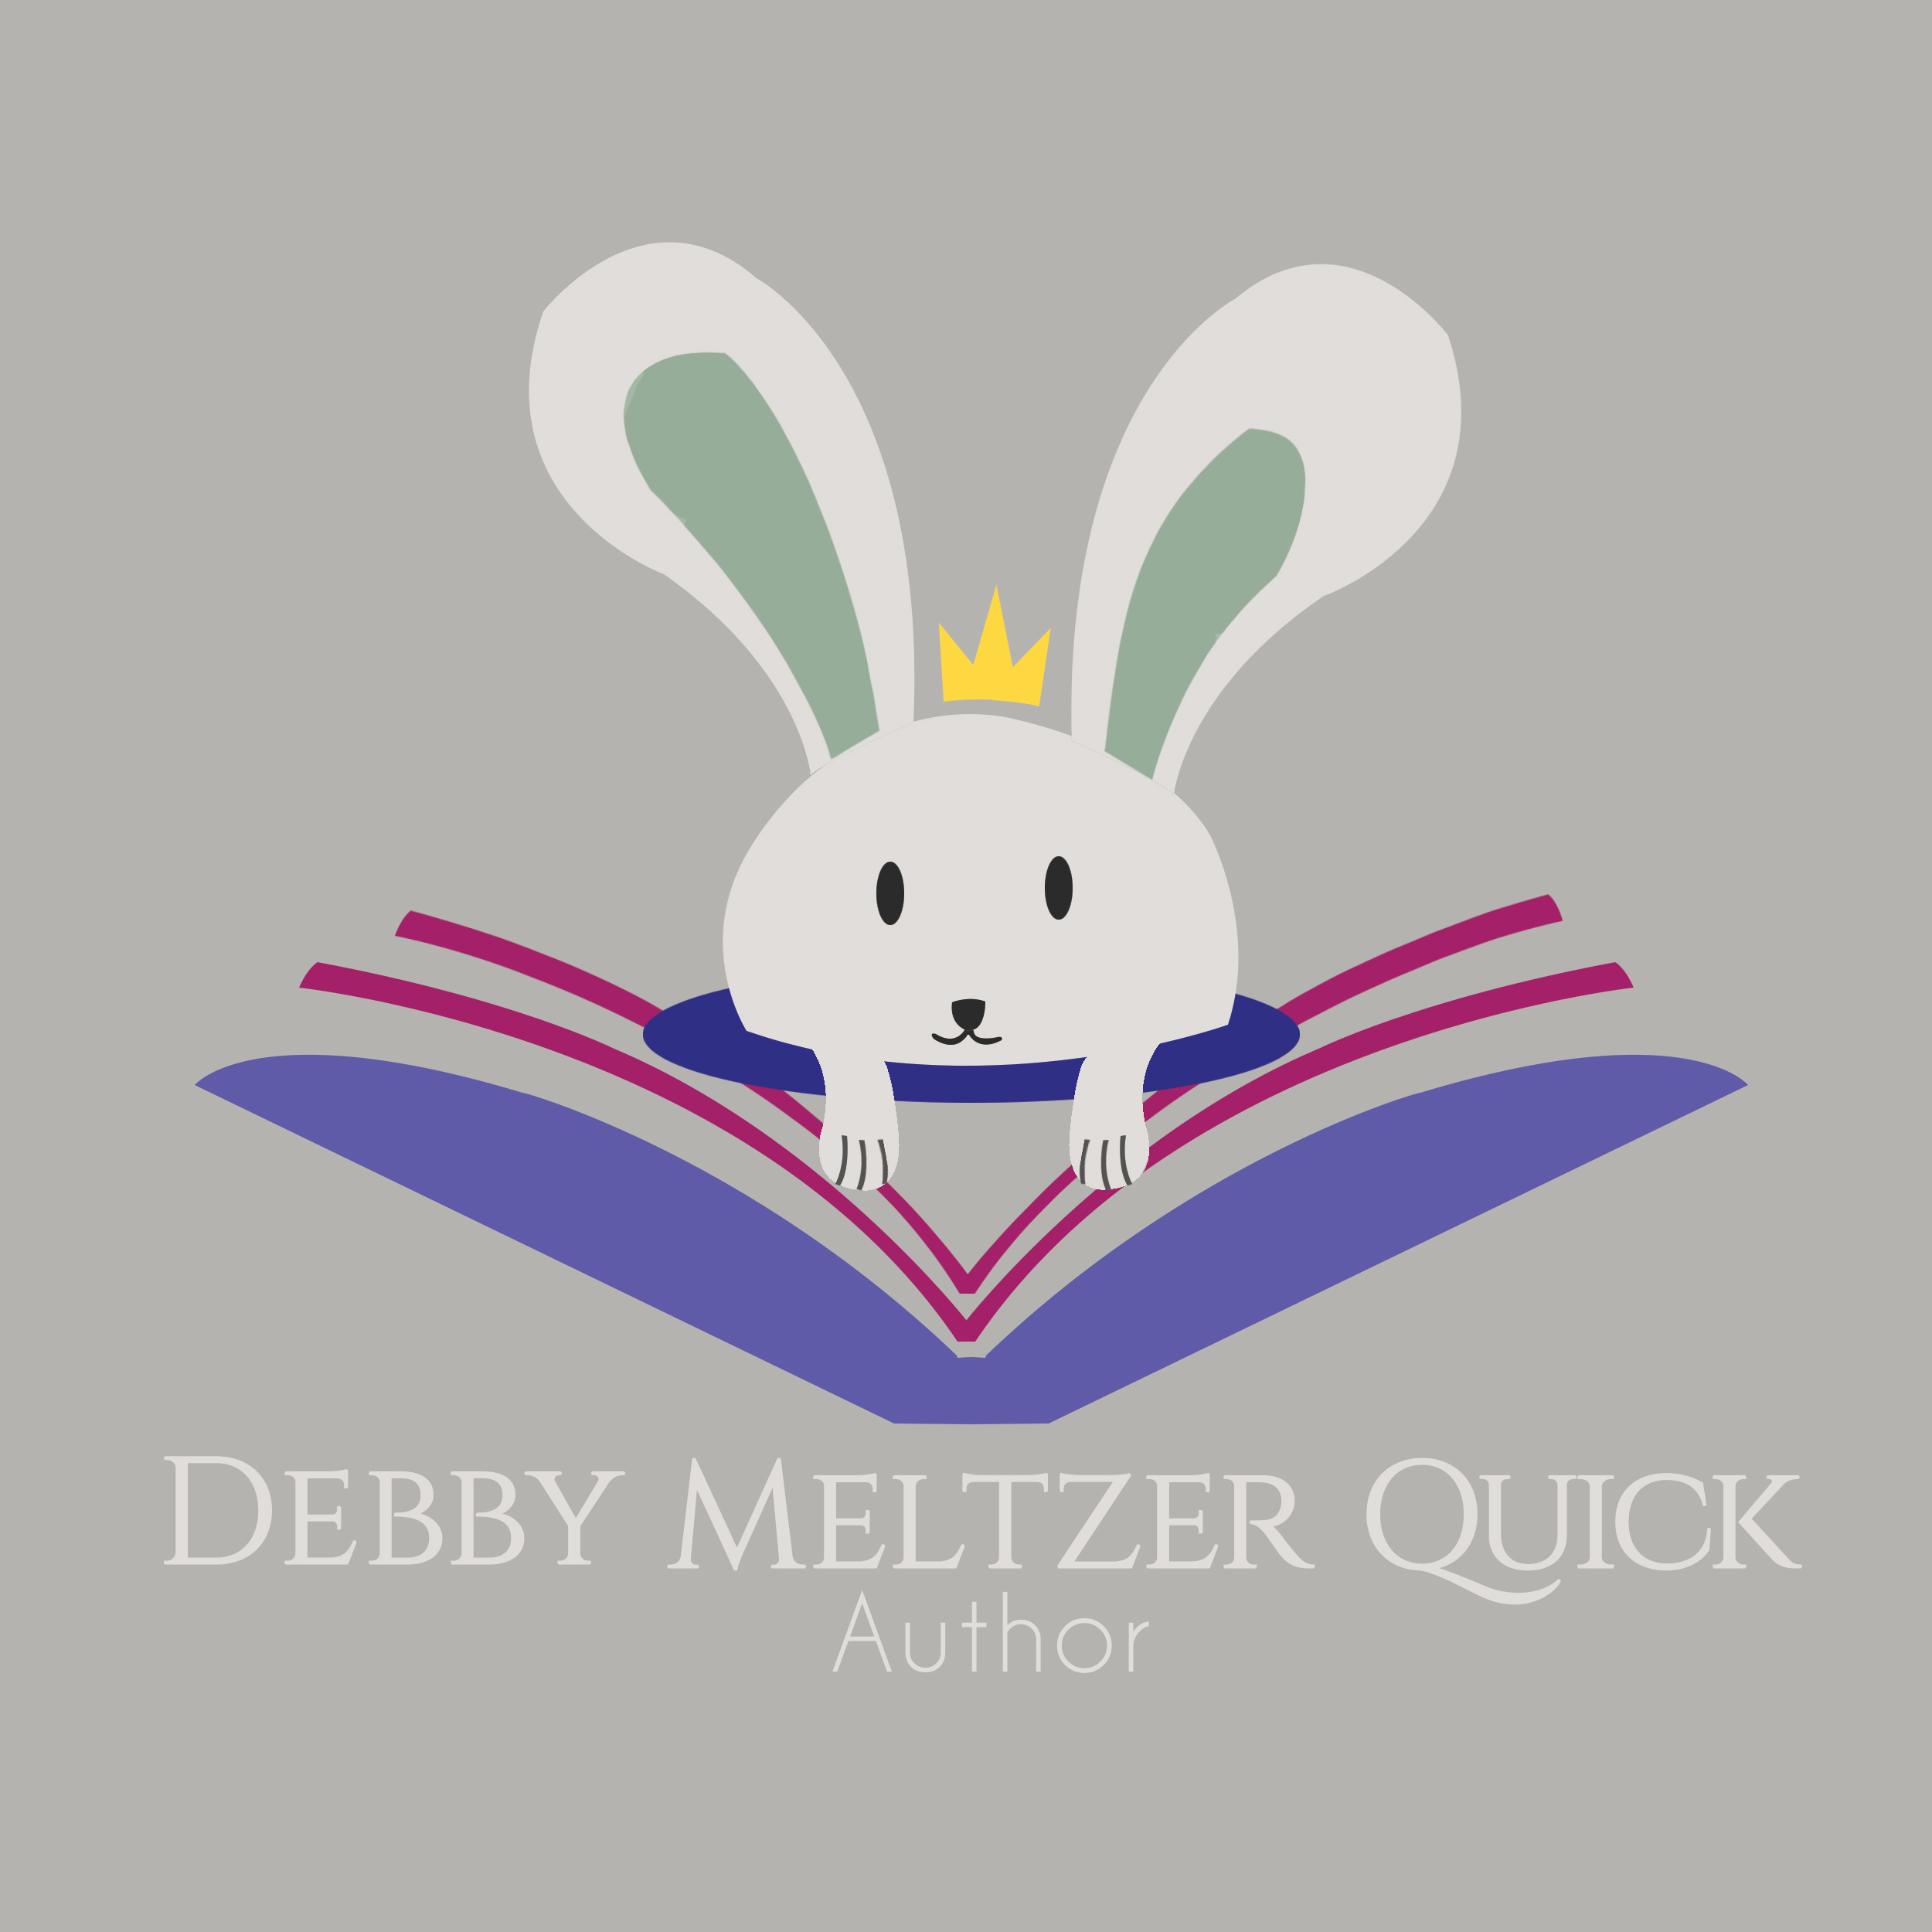 Debby Meltzer Quick, Author